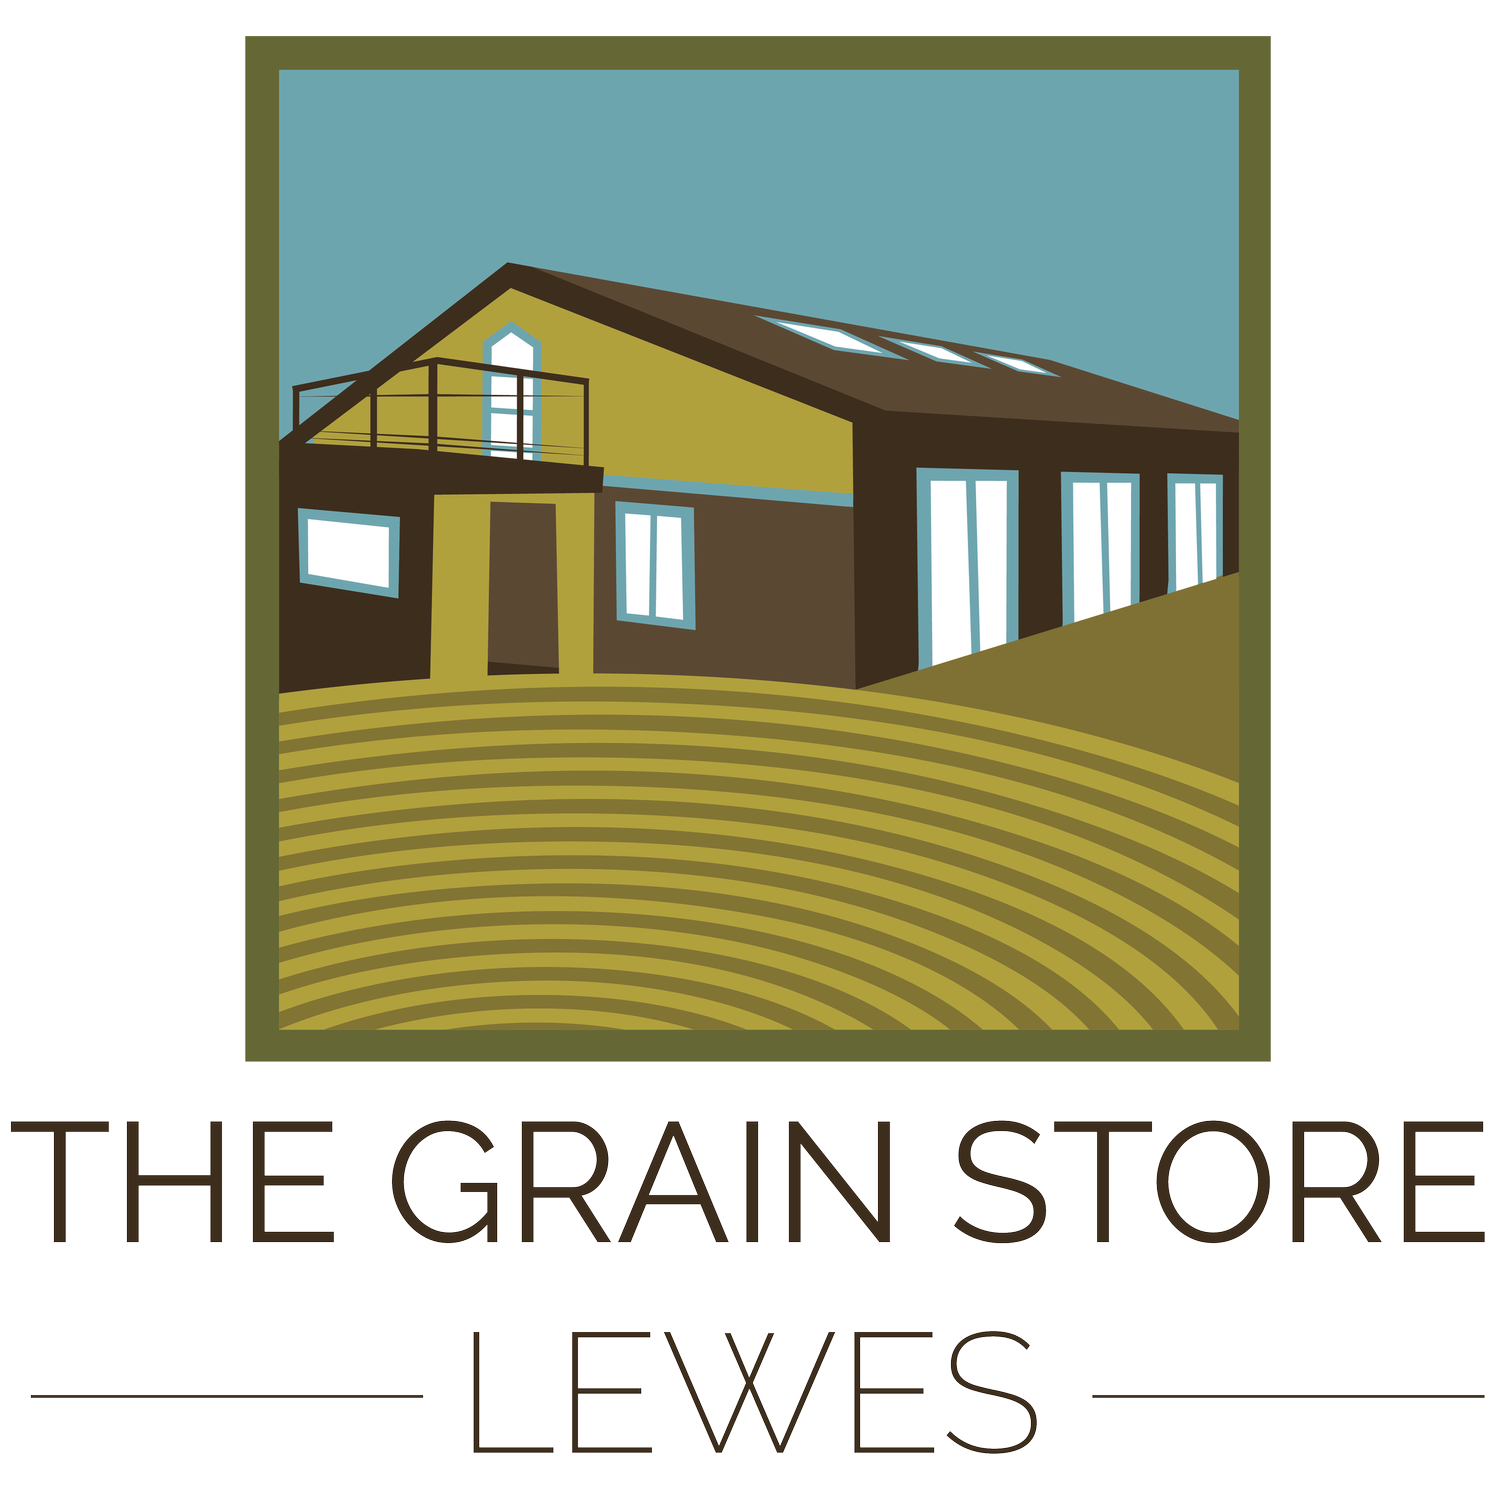 The Grain Store Lewes